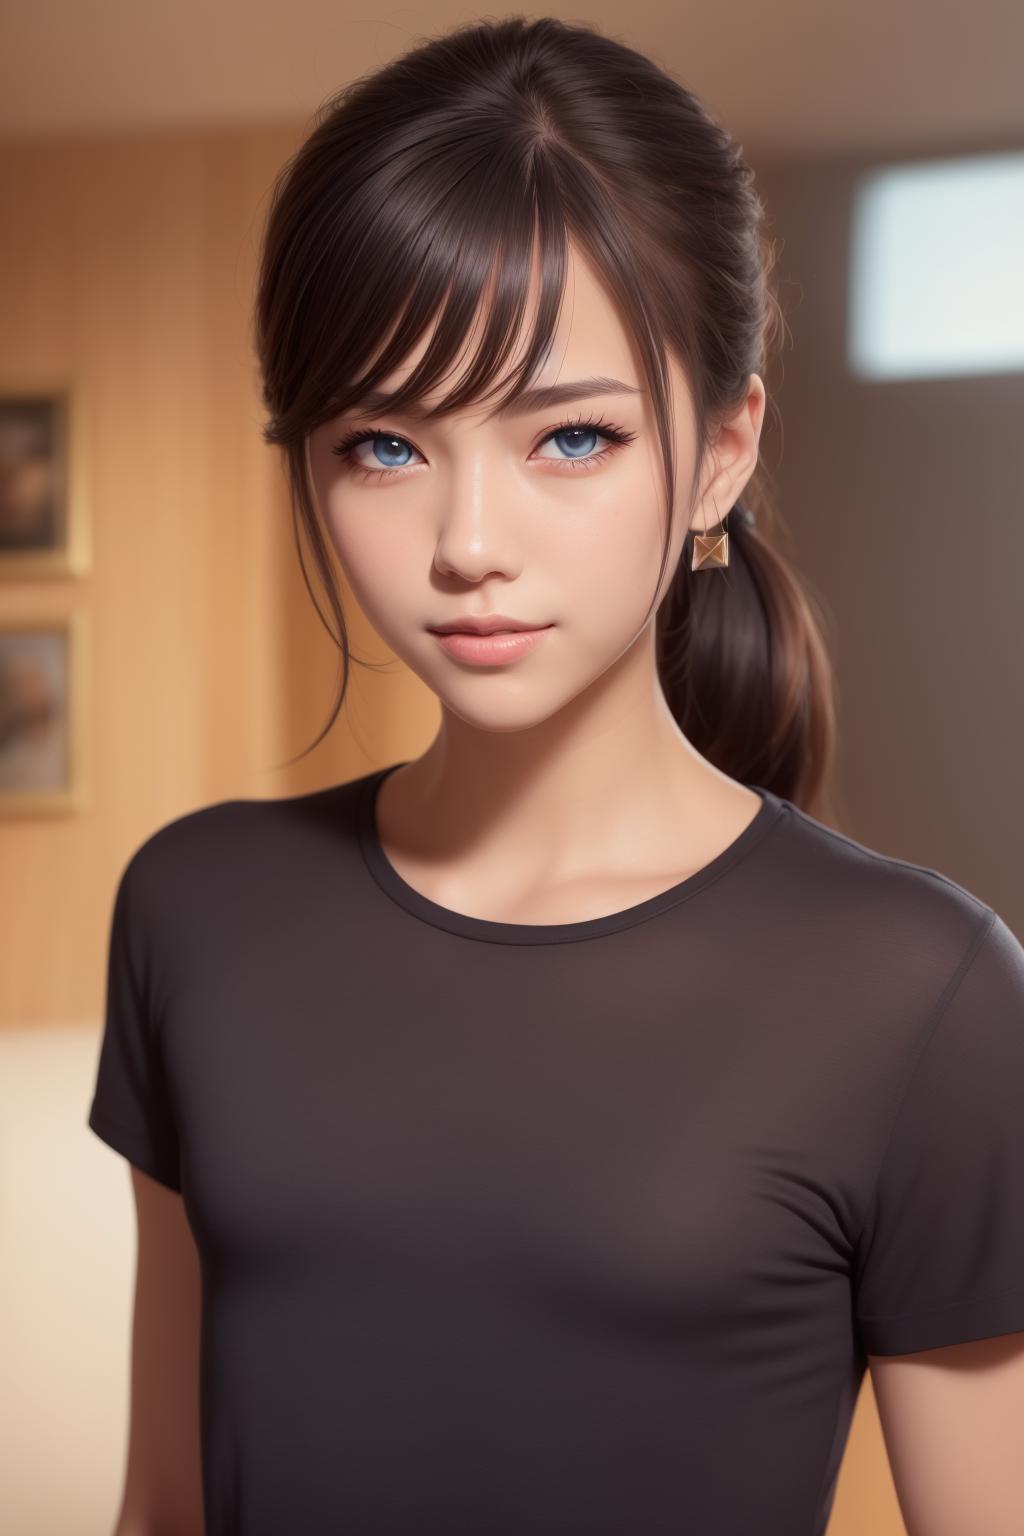 AI model image by Nyaa